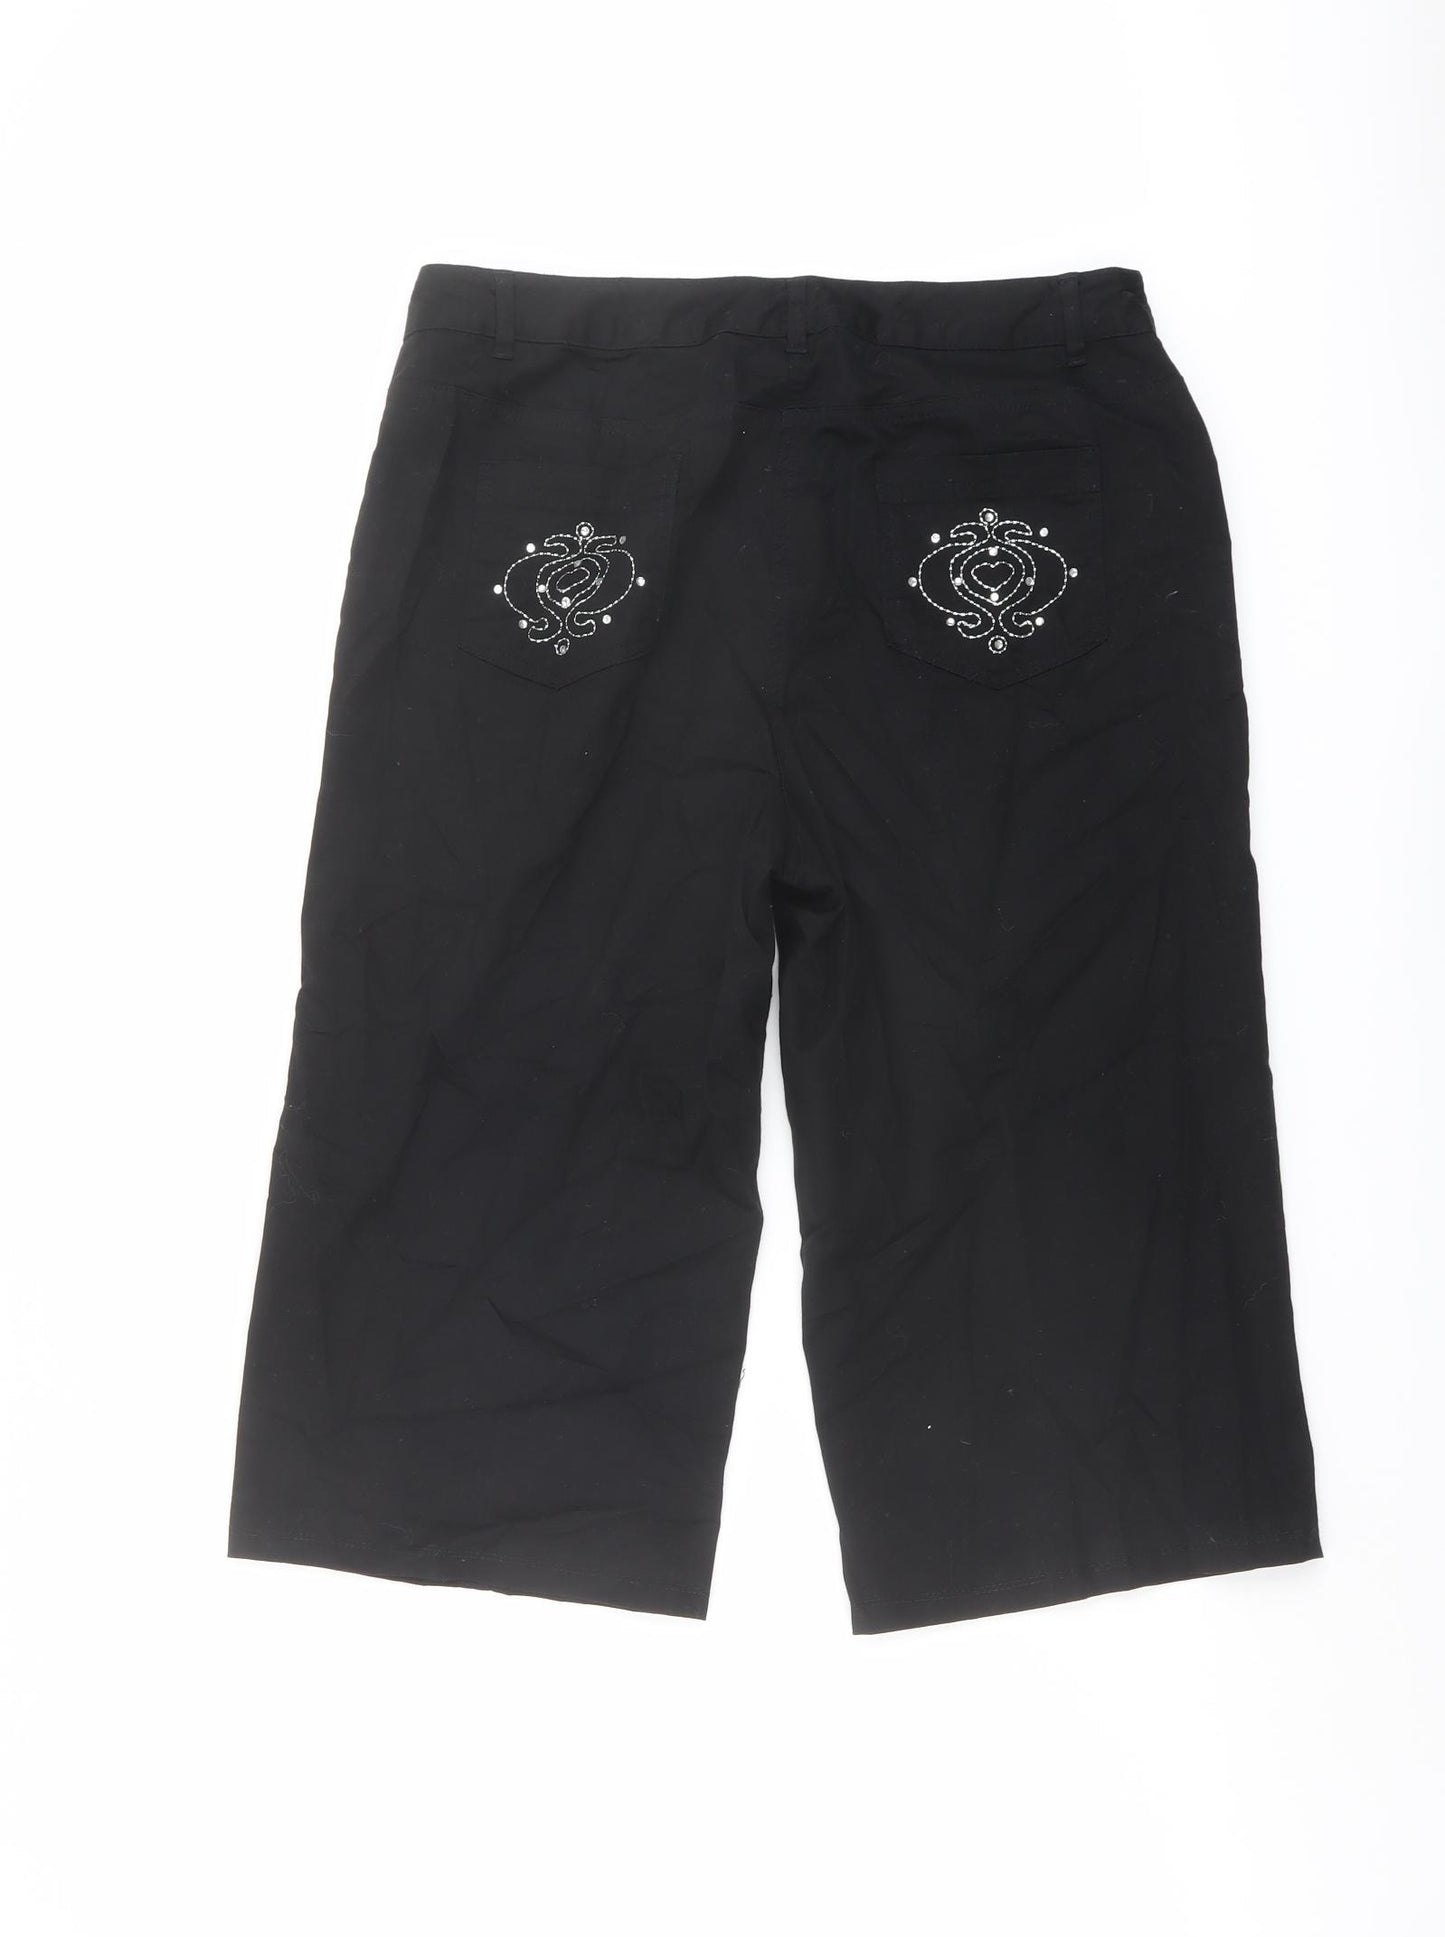 Bonmarché Womens Black Cotton Skimmer Shorts Size 12 L18 in Regular Button